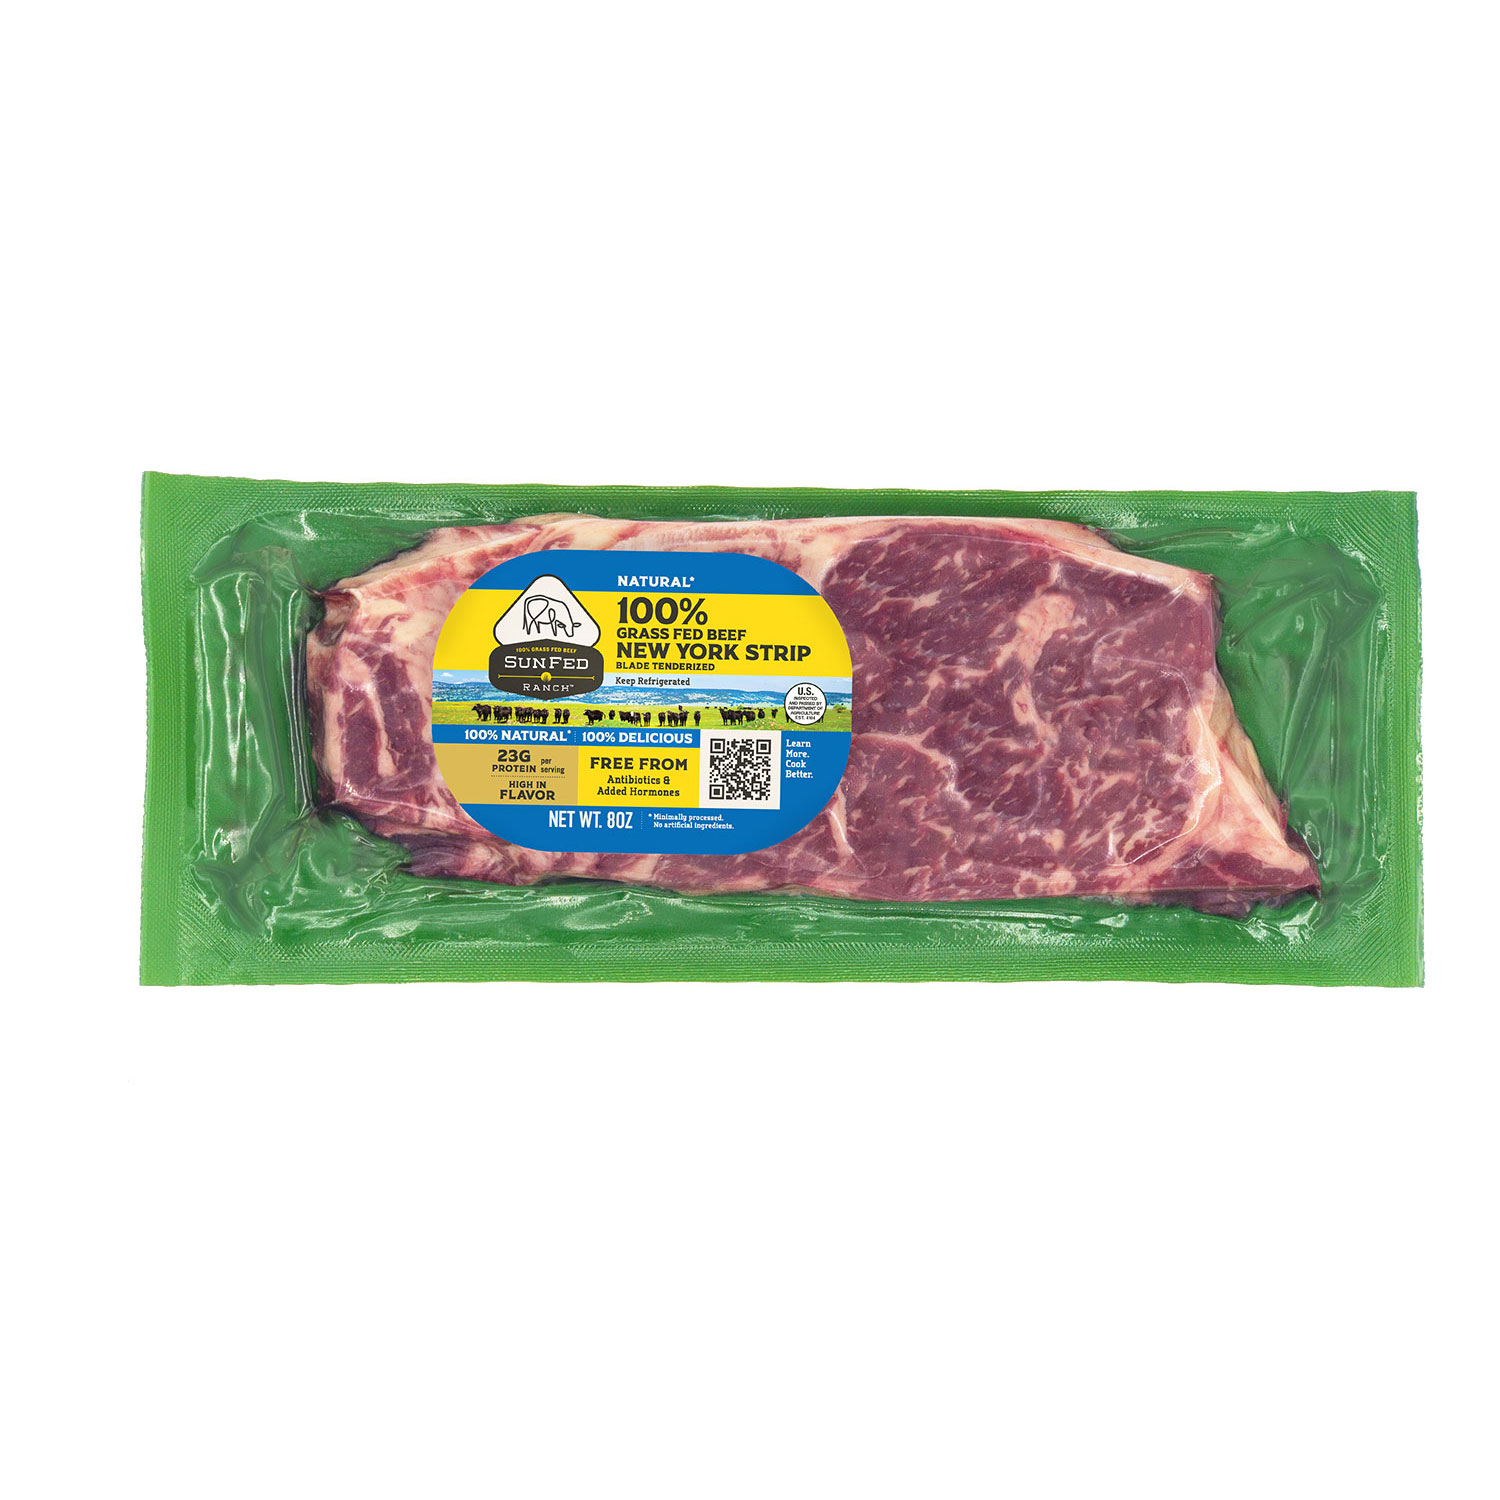 Natural NY Striploin Steak